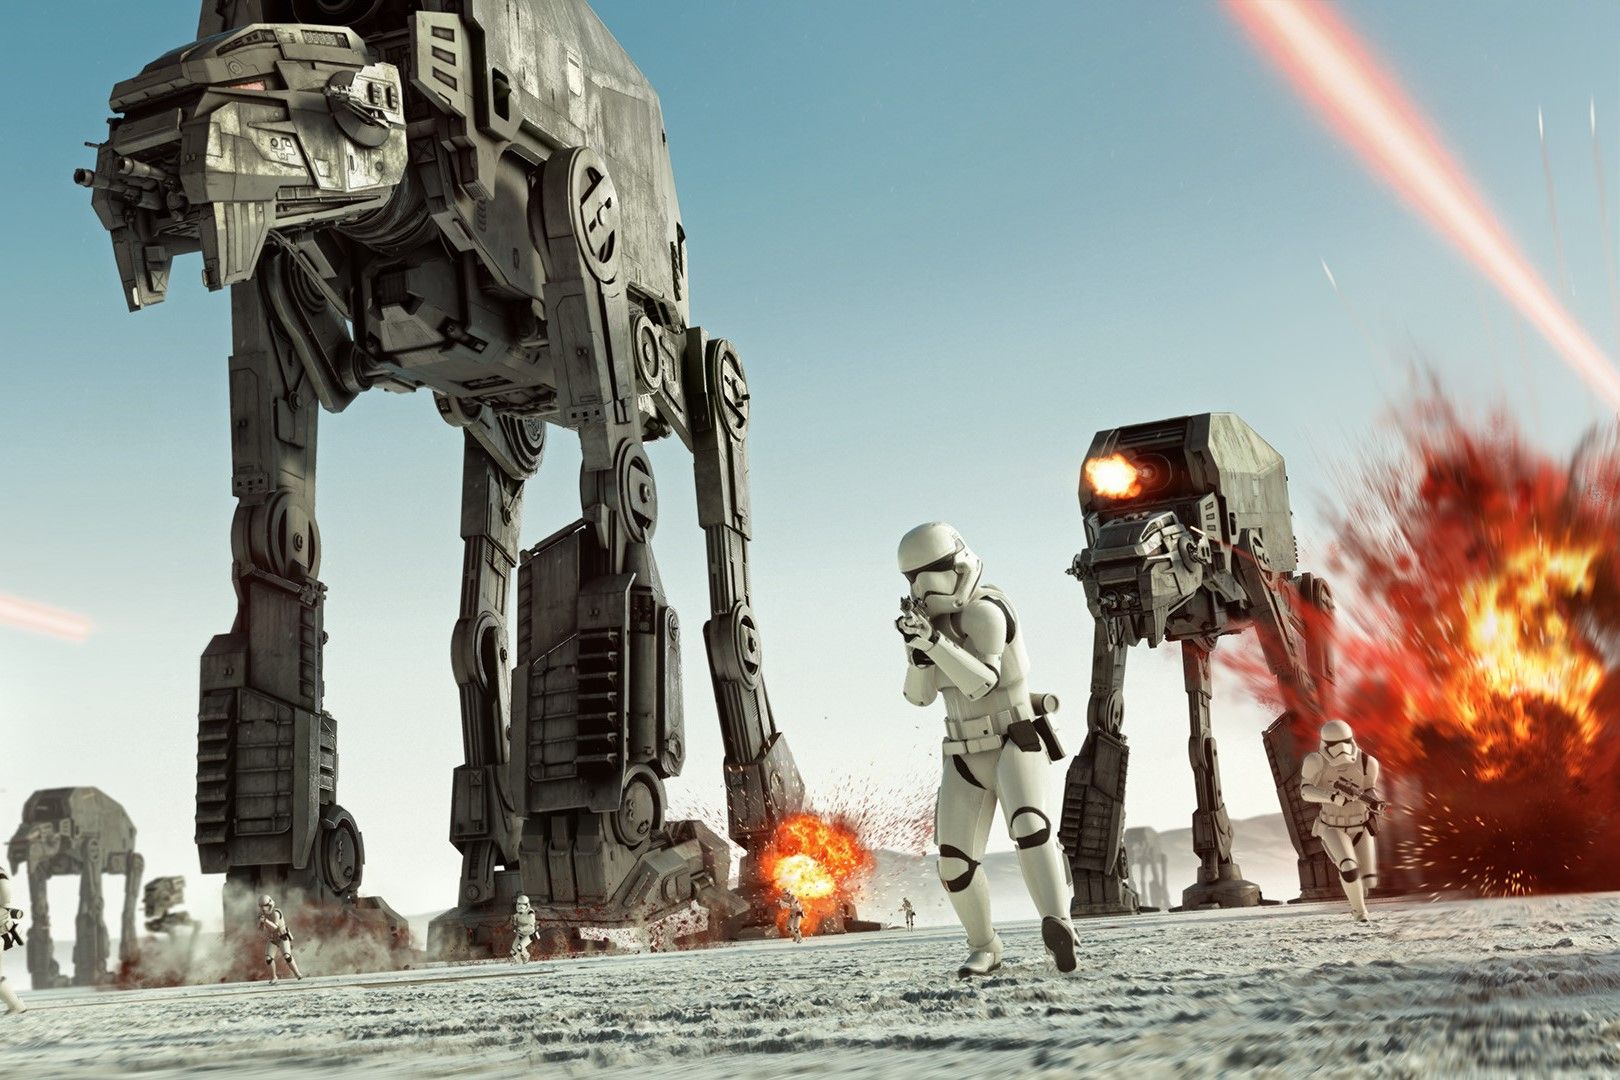 Screenshot from Star Wars Battlefront II showing a battle scene